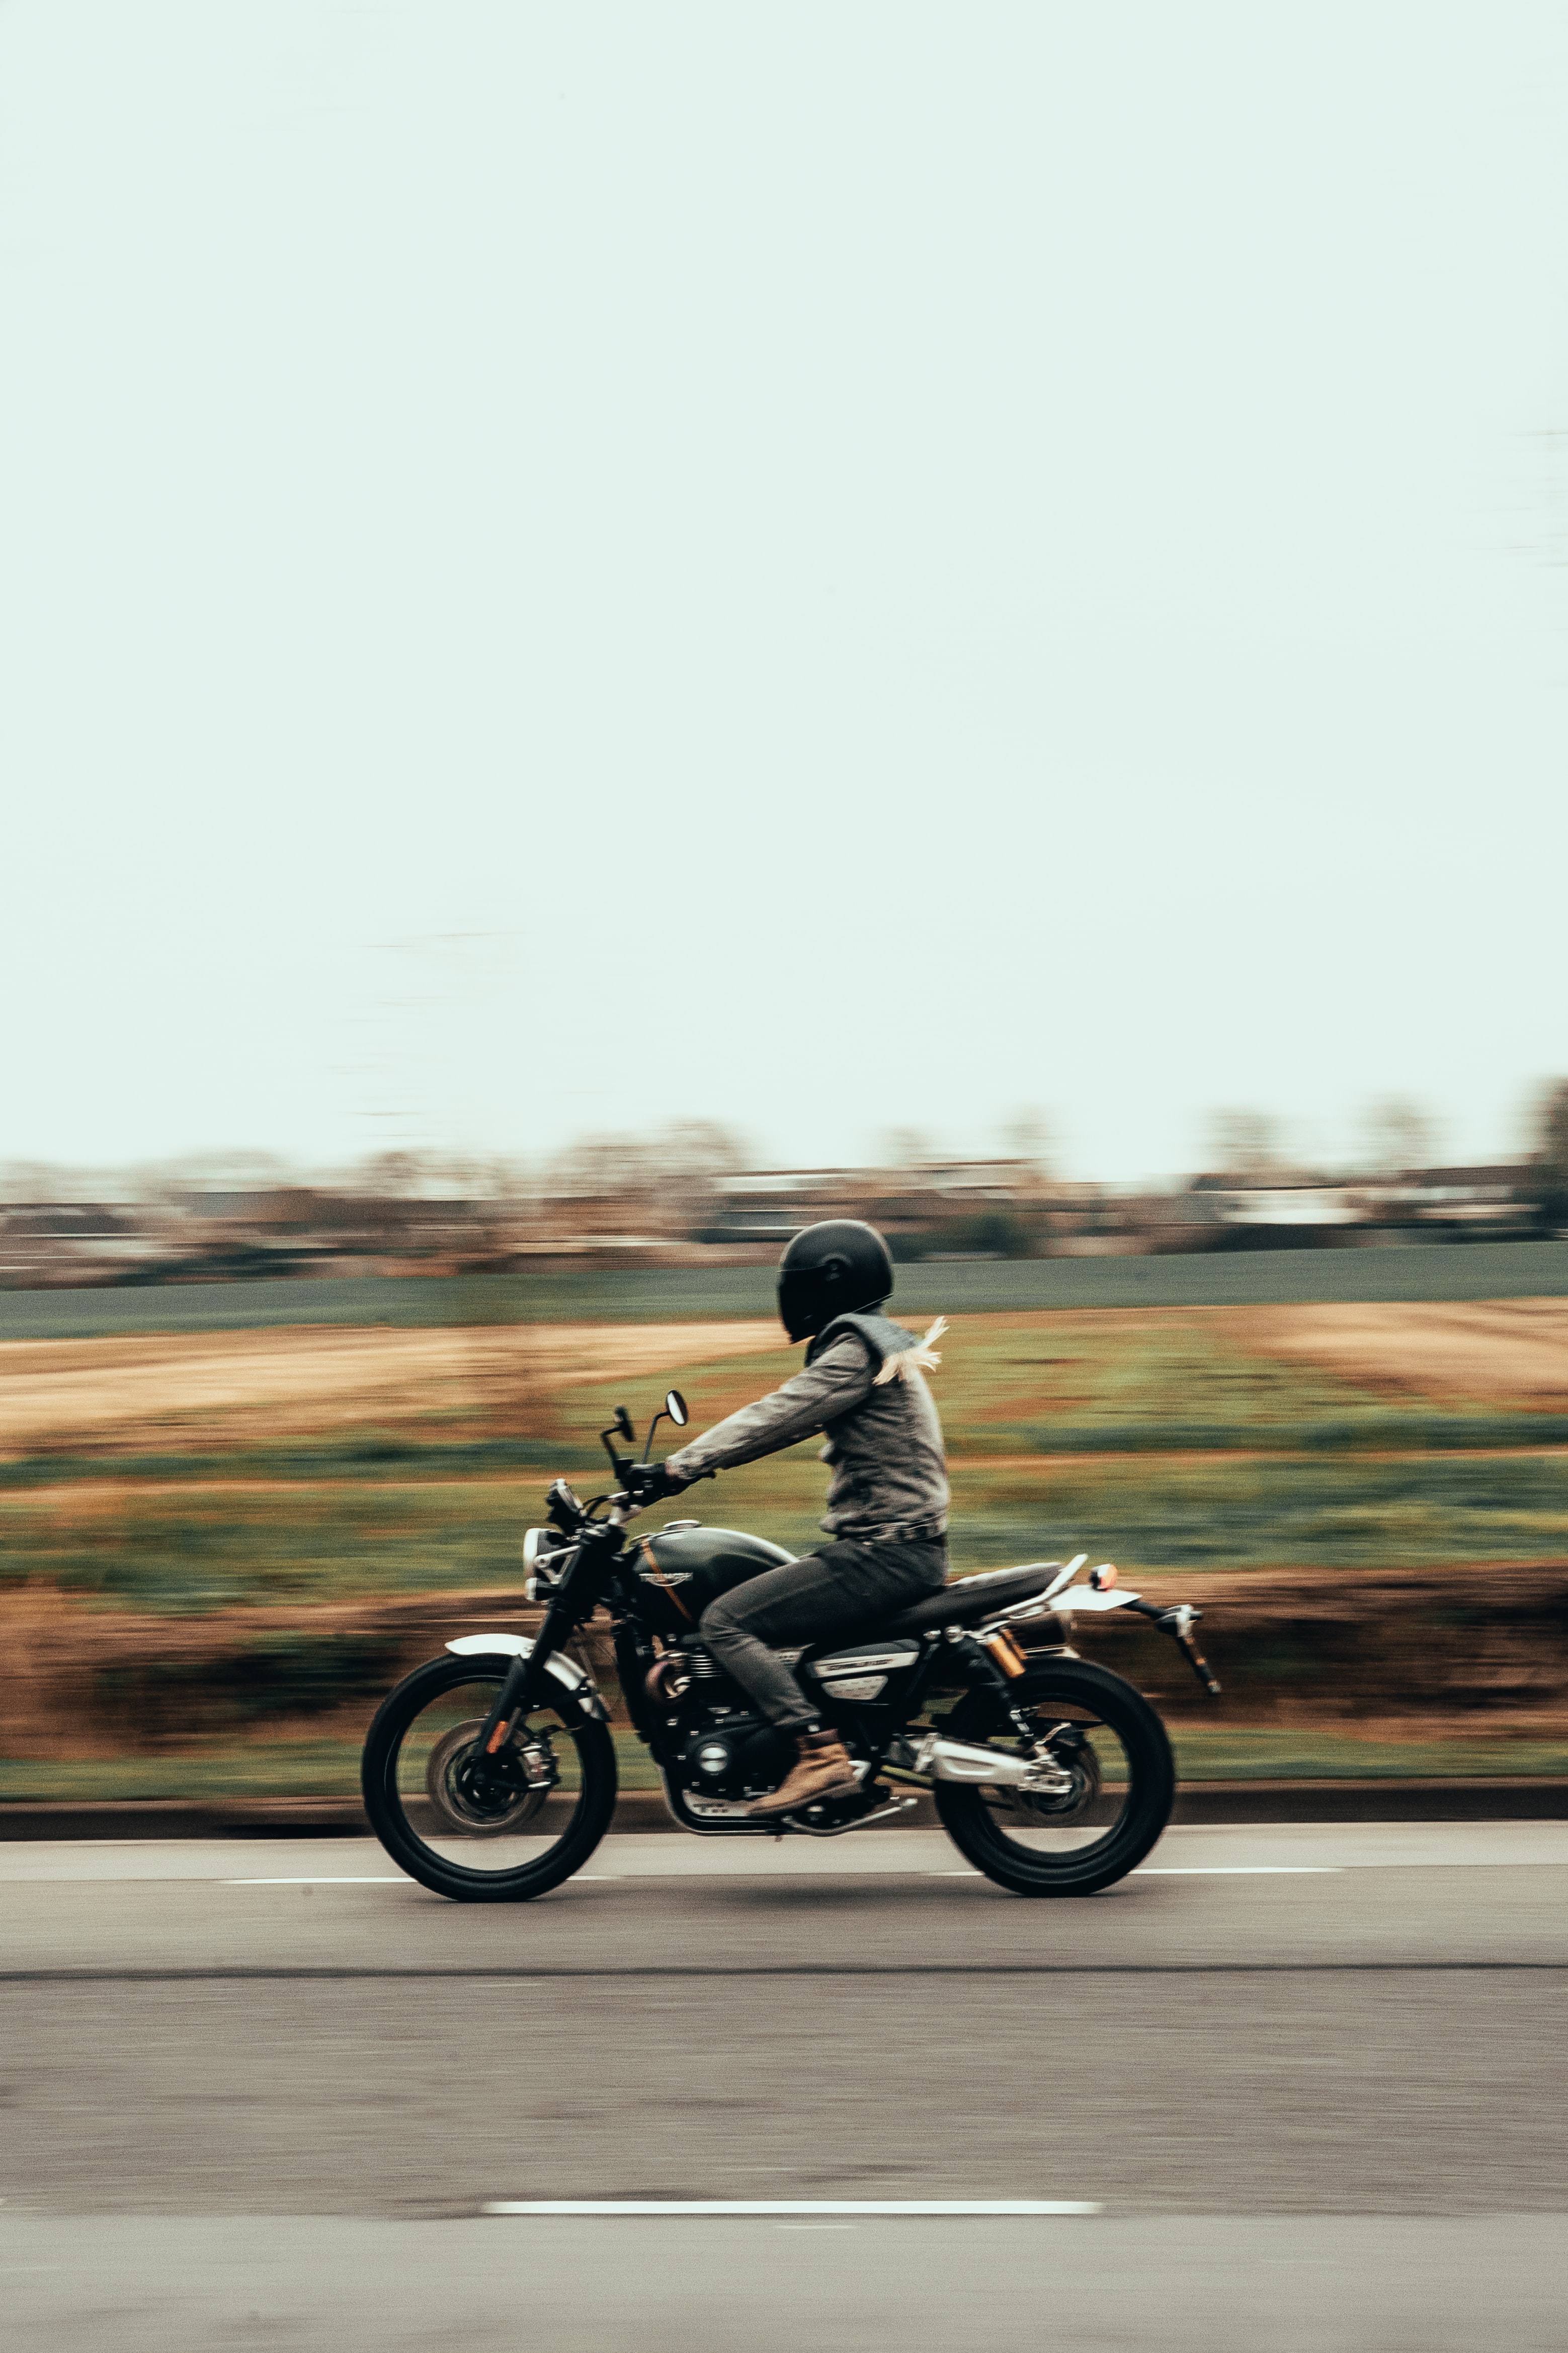 helmet, motorcycles, traffic, movement, motorcycle